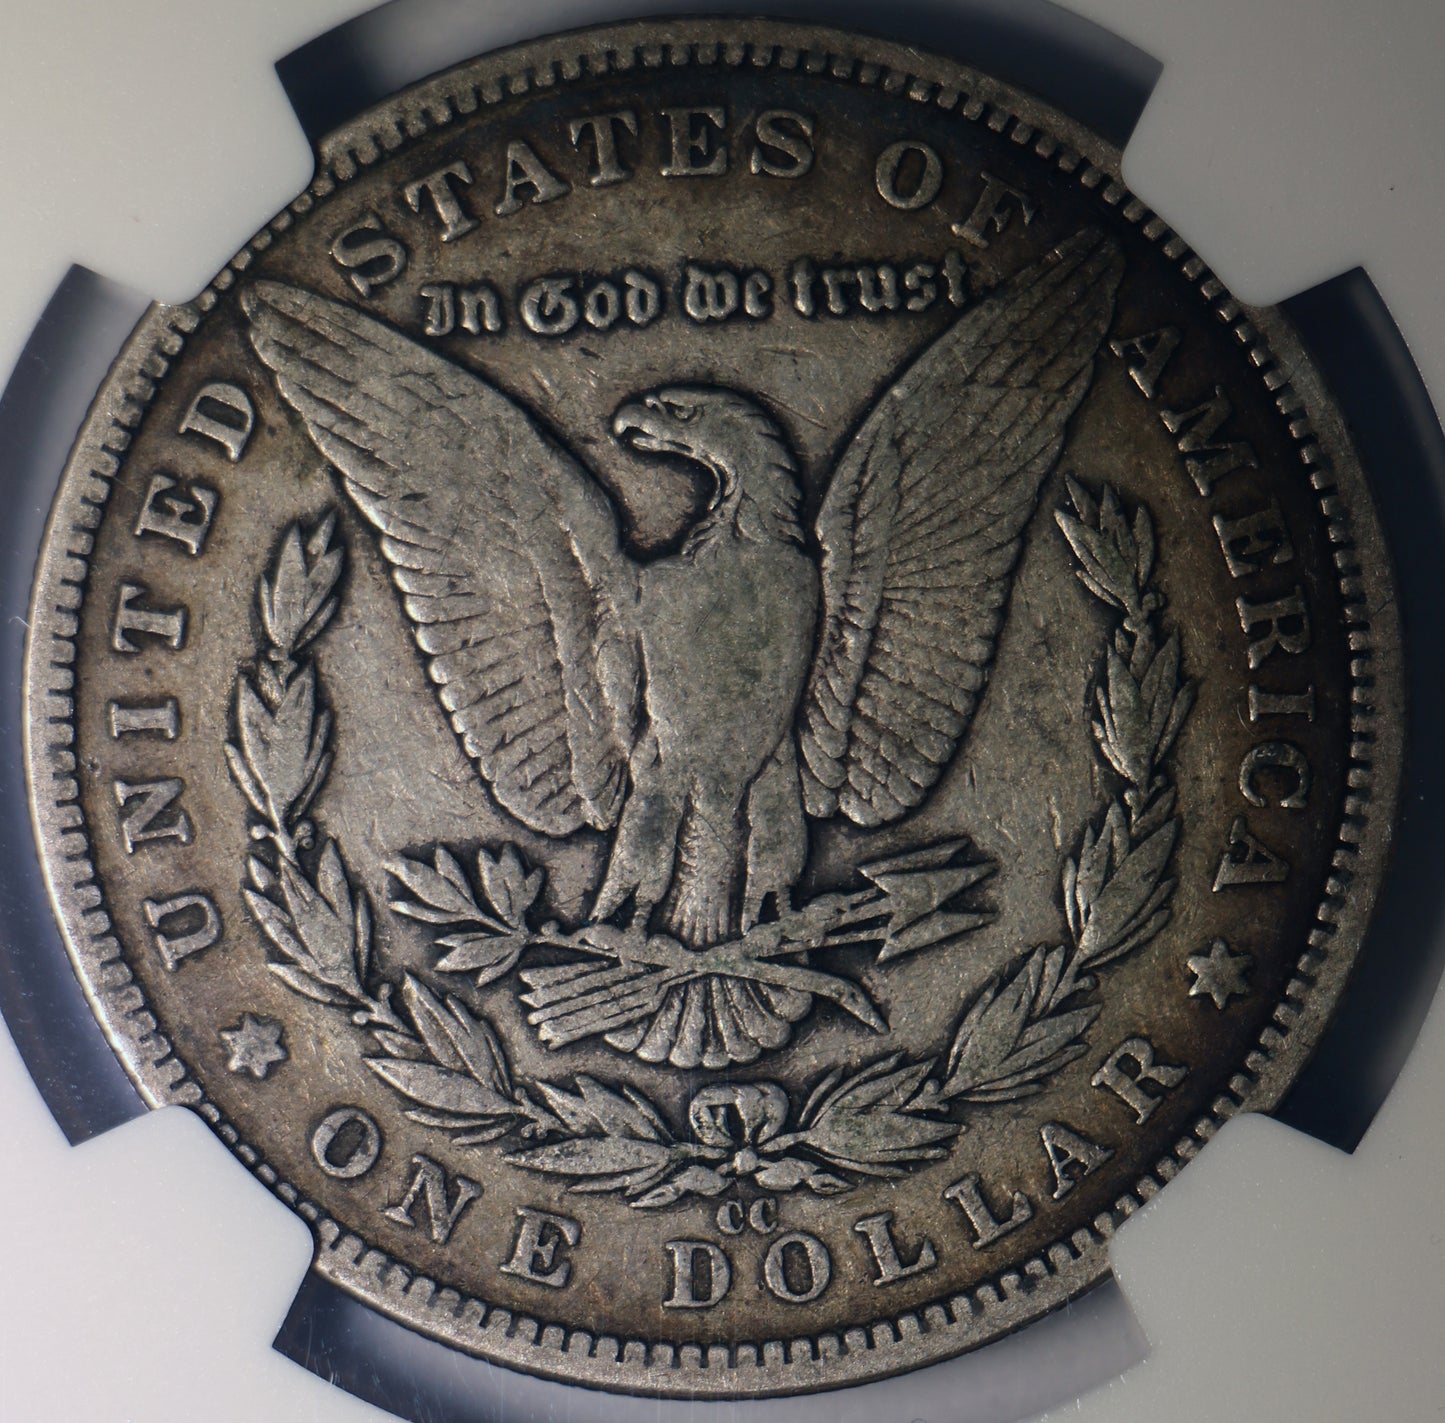 1893-CC NGC VF20 Morgan Silver Dollar Key Date Brown Label